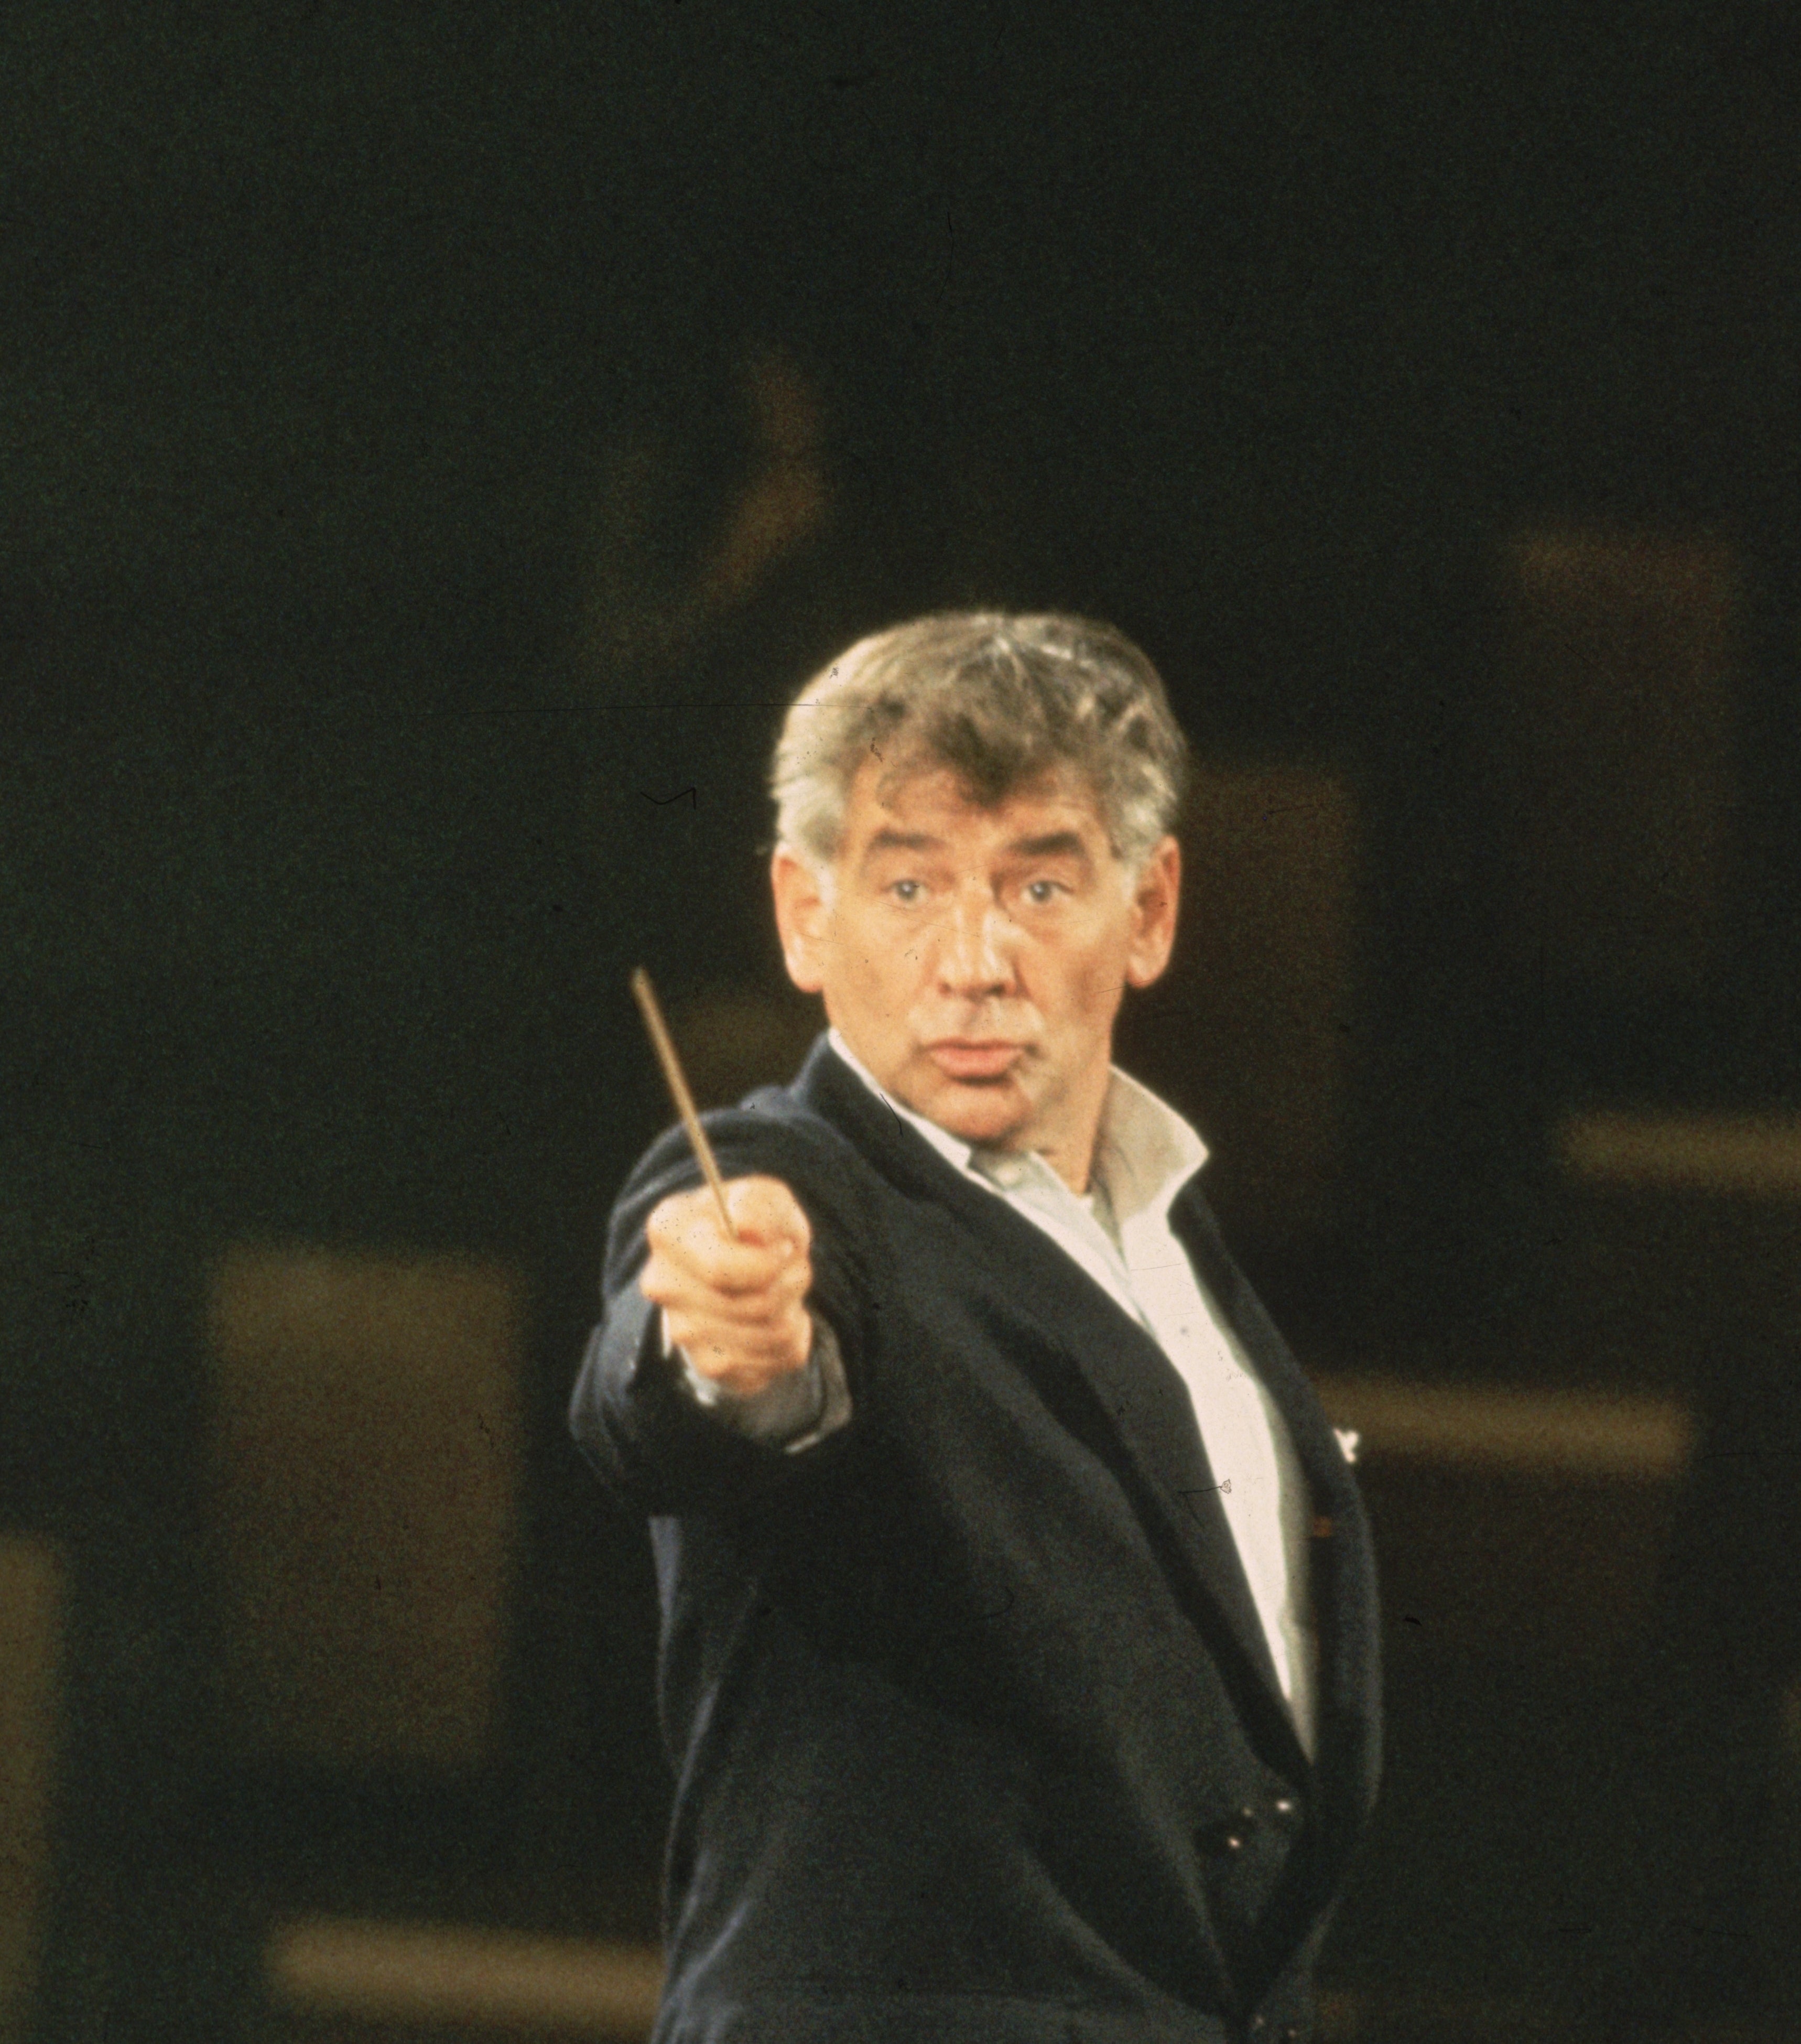 Close-up of Bernstein conducting